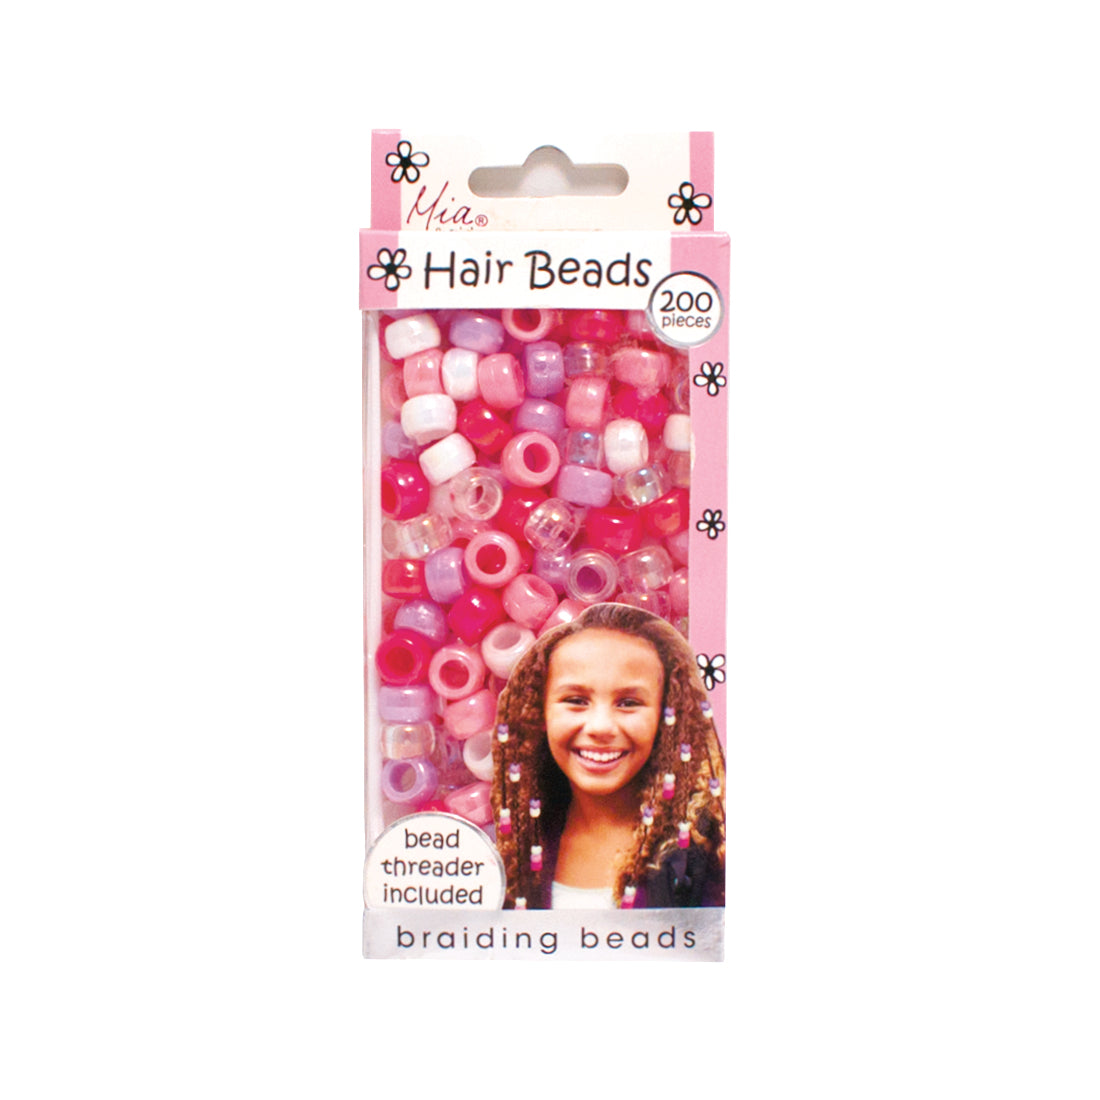 Mia® Girl Hair Beads - 200 beads shown in packaging - assorted rainbow colors - designed by #MiaKaminski #Mia #MiaBeauty #Beauty #Hair #HairAccessories #lovethis #love #life #woman #hairbeads #ethnichair #jamaicanhair